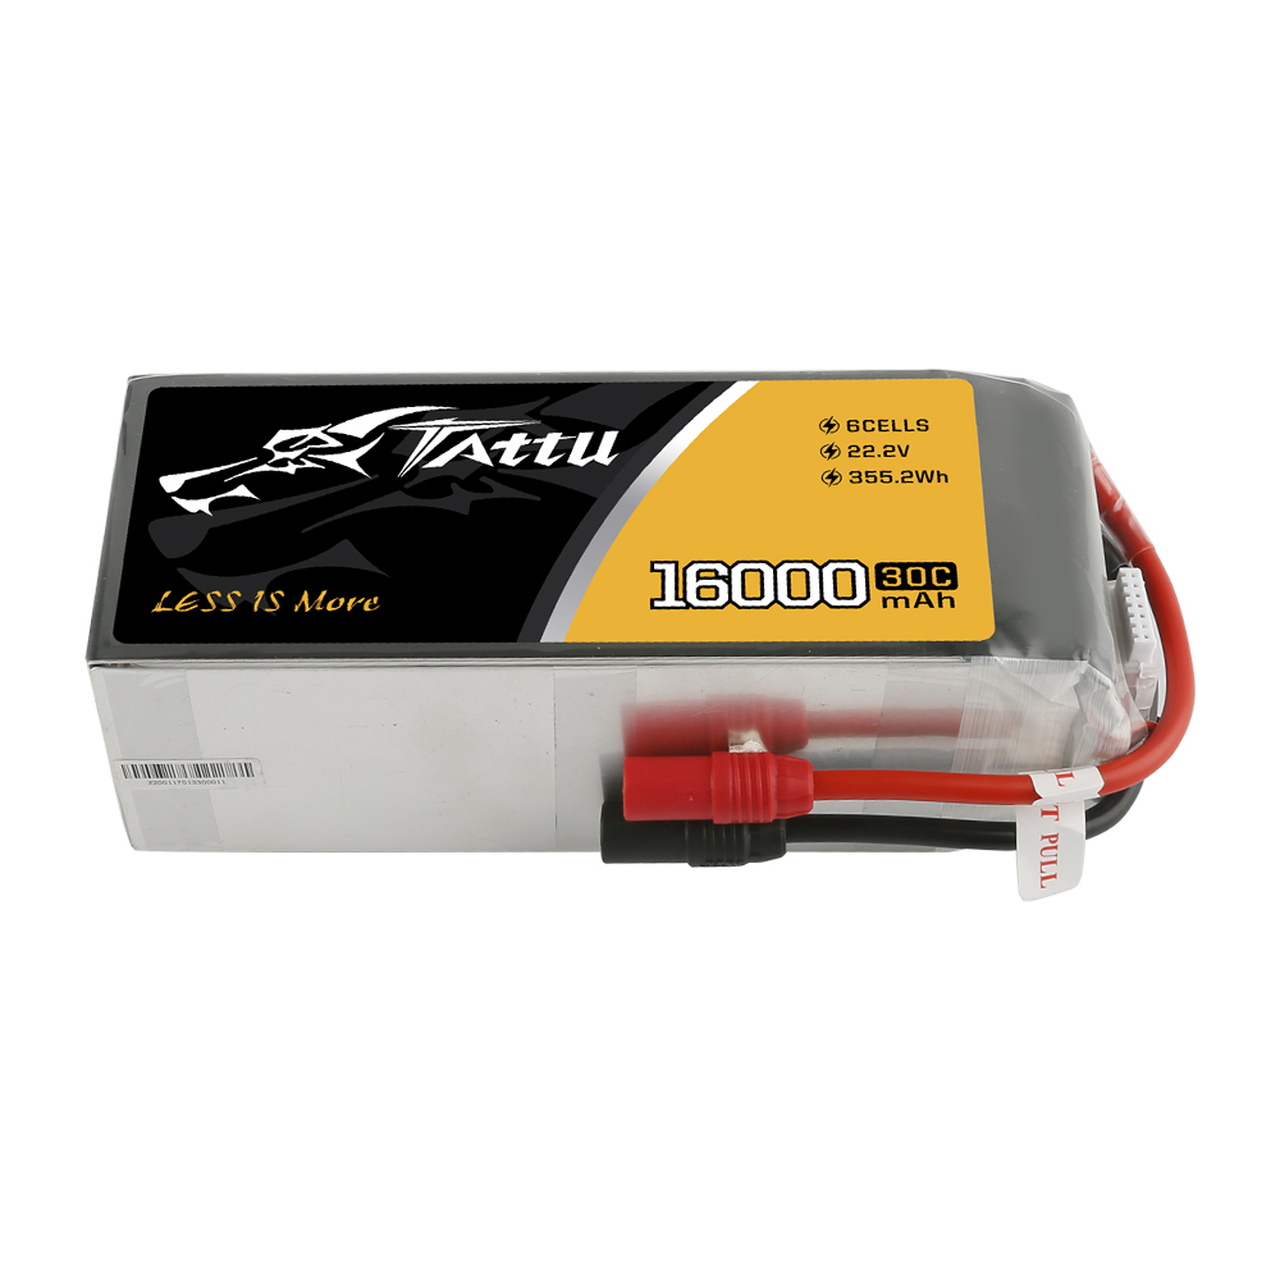 Tattu 16000mAh 30C 22.2V 6S Lipo Battery Pack with AS150+AS150 Plug